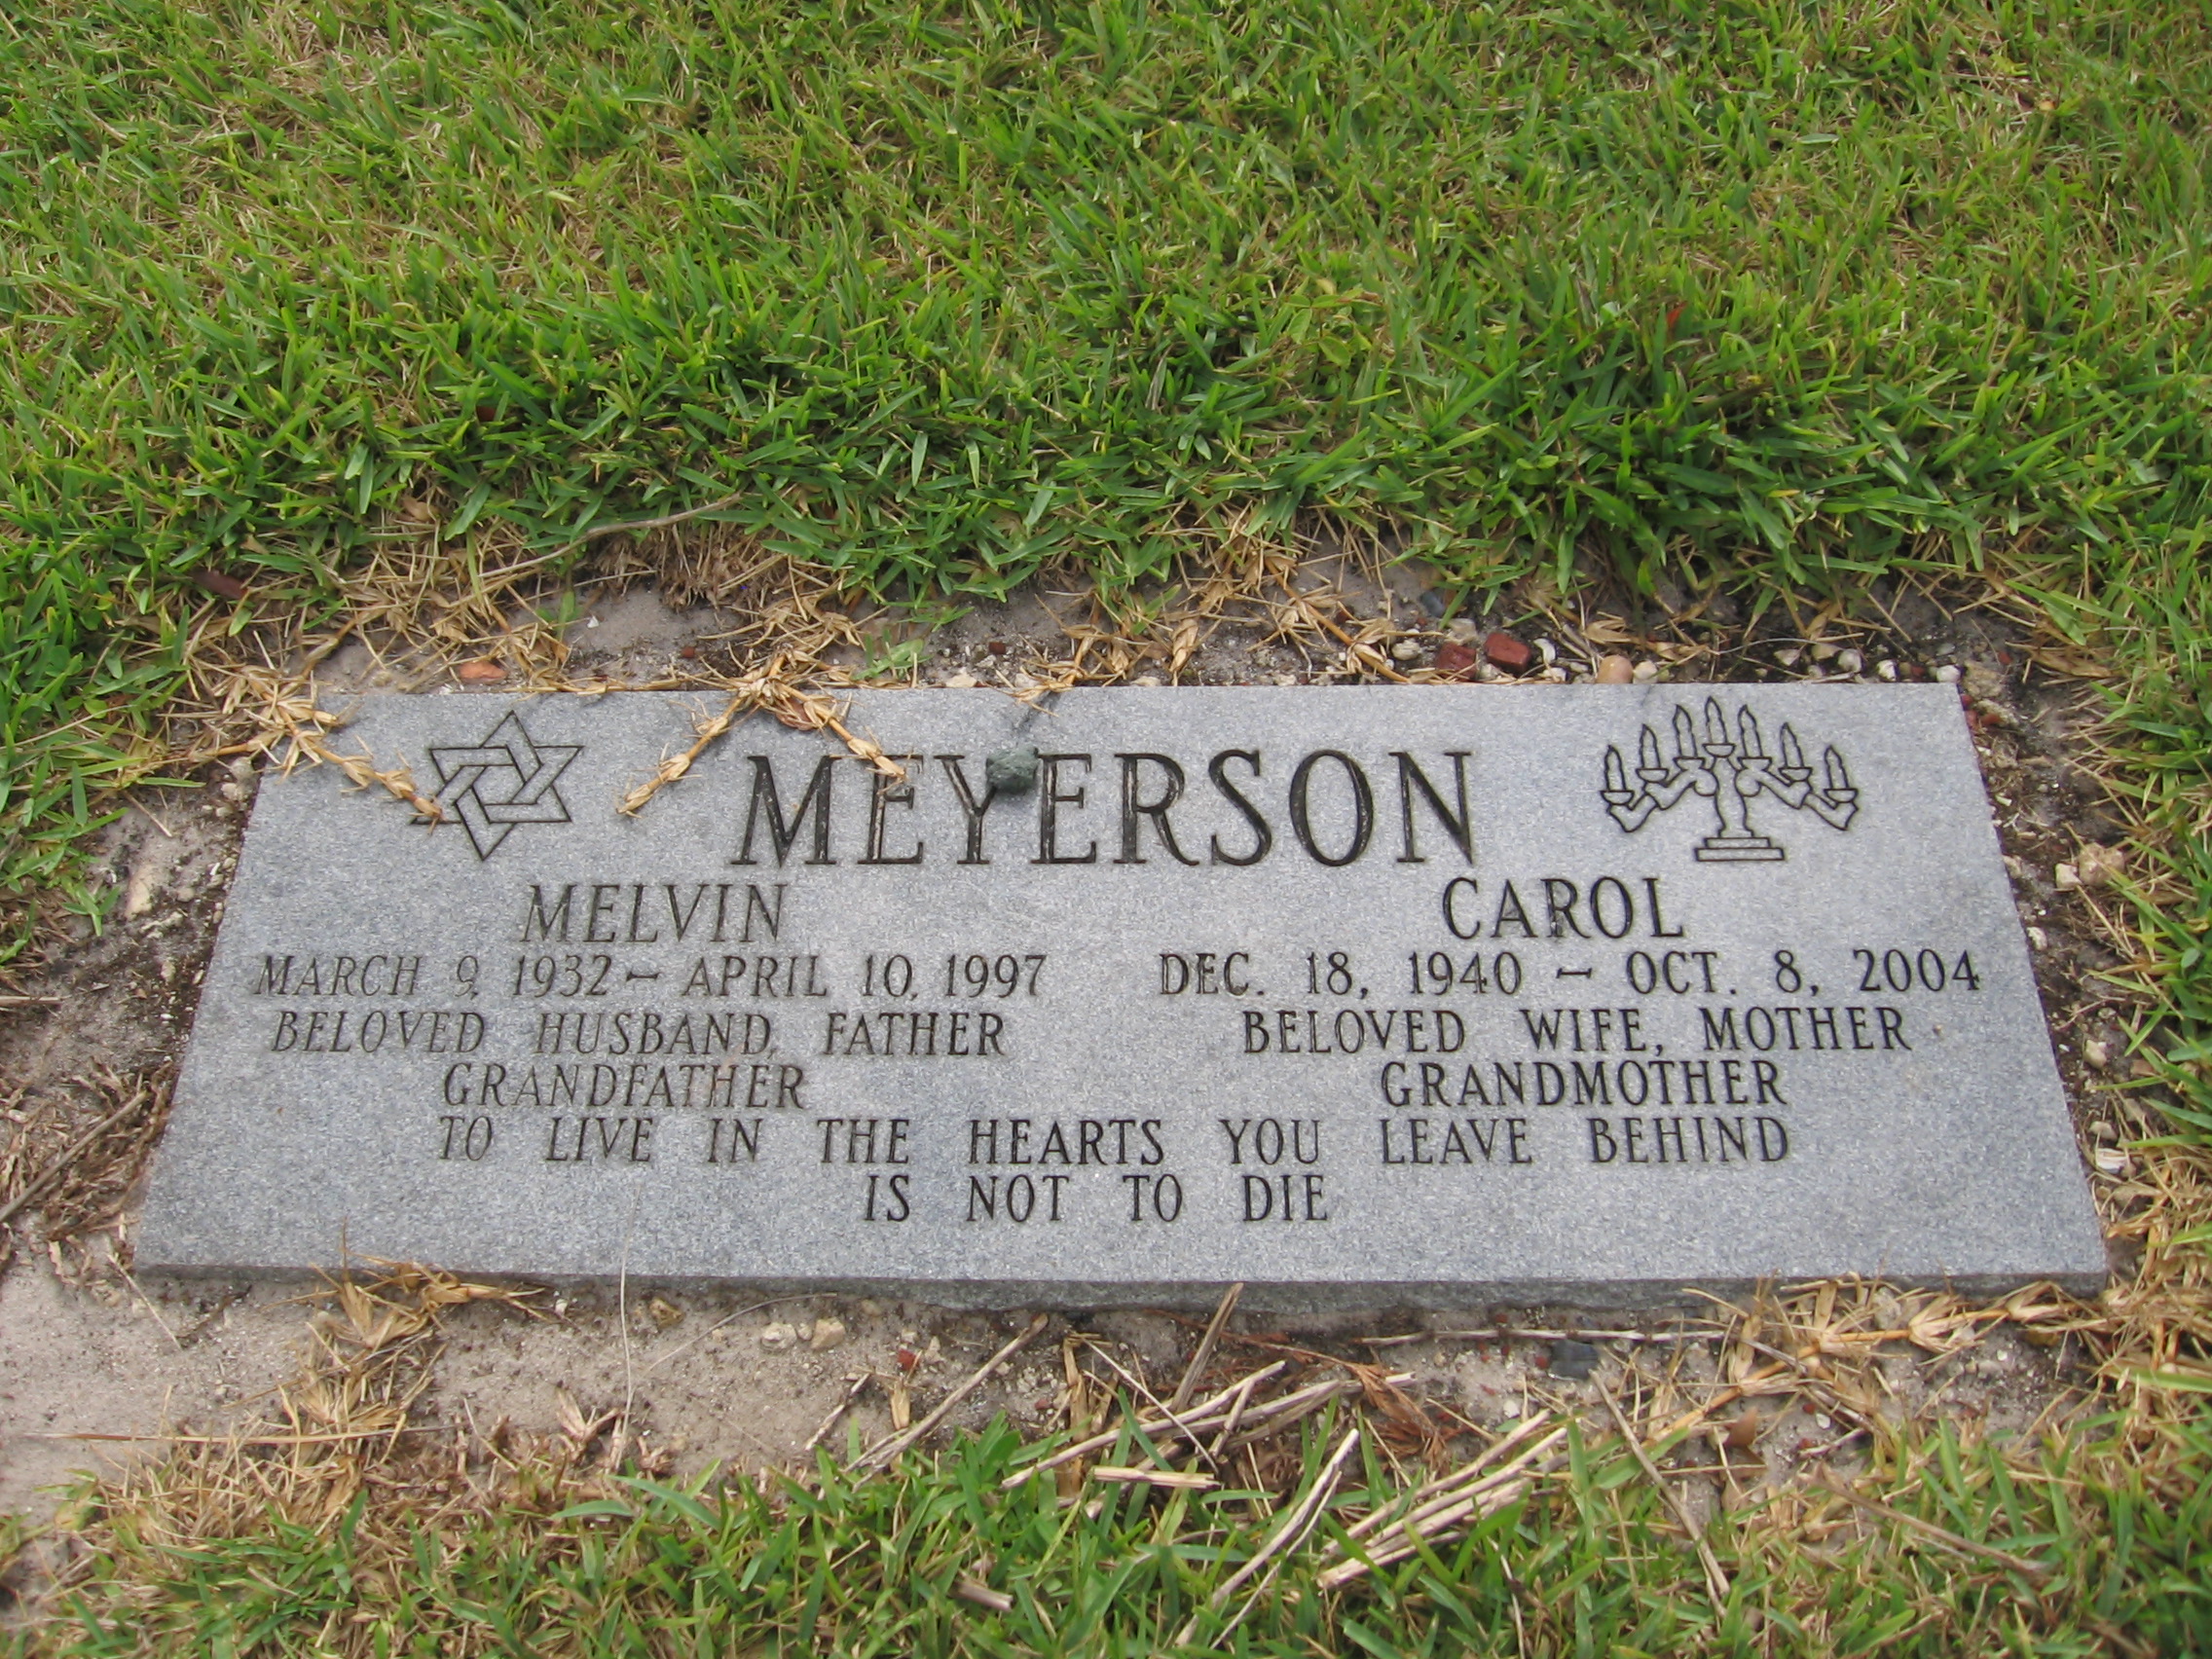 Carol Meyerson